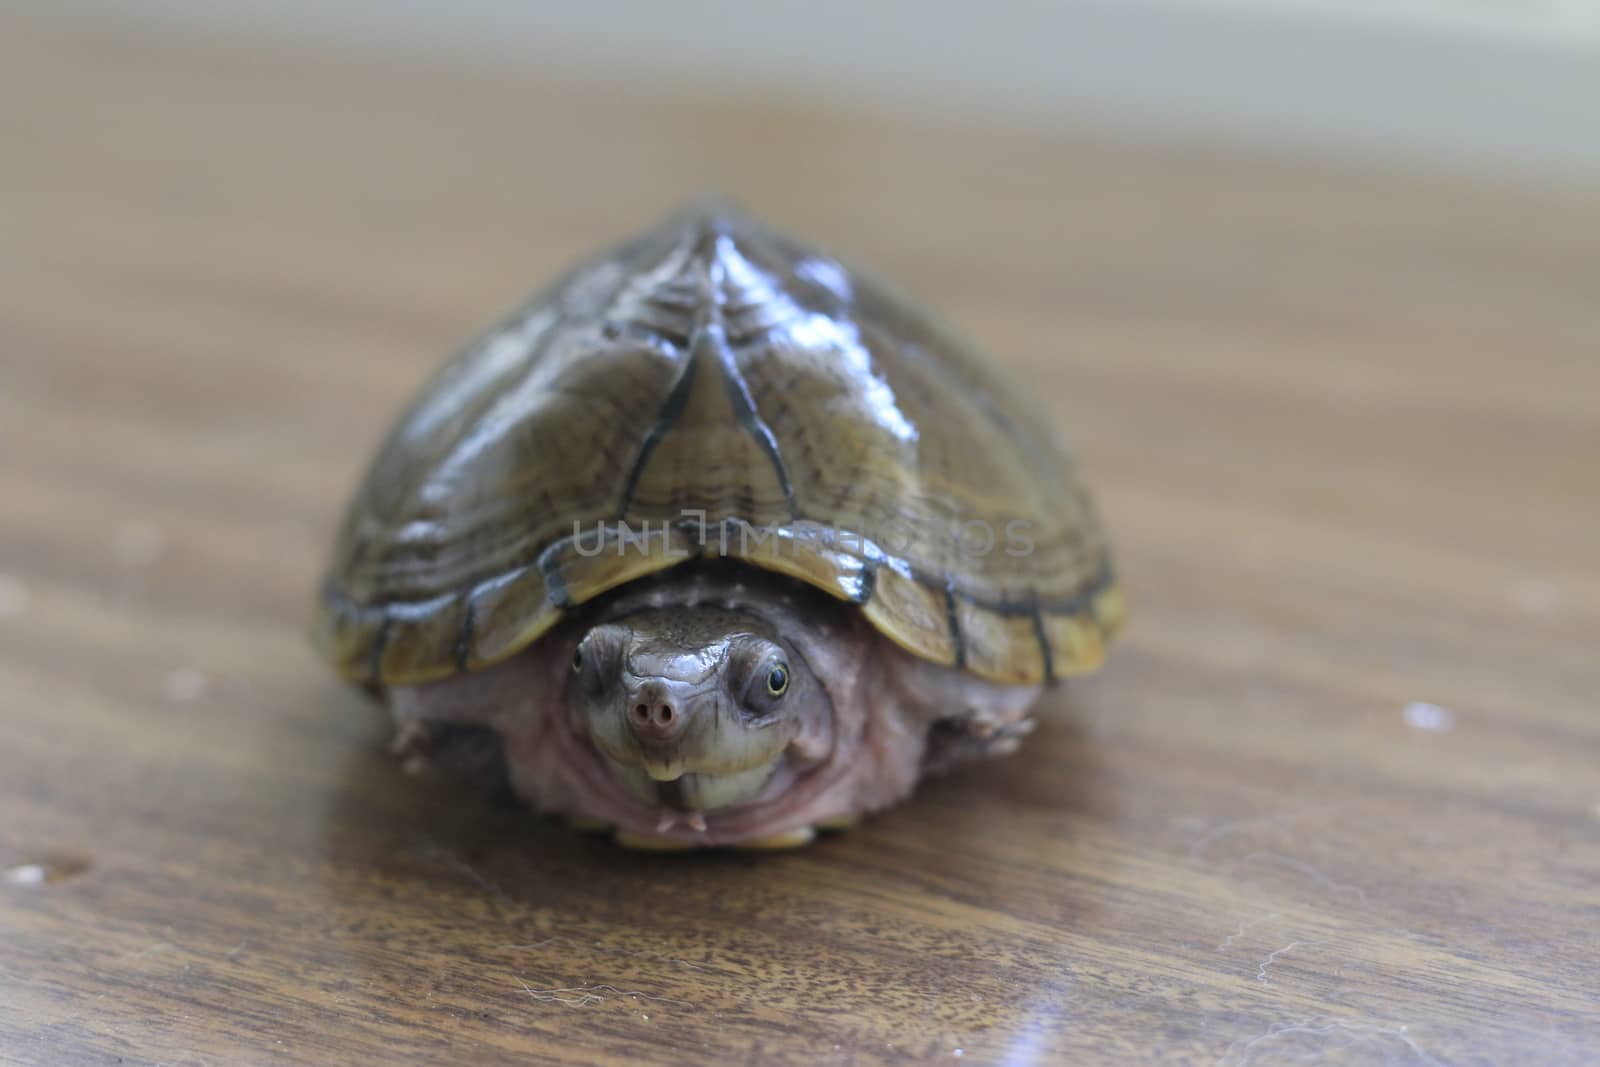 Razorback musk turtle or sternotherus carinatus isolated on table by mynewturtle1